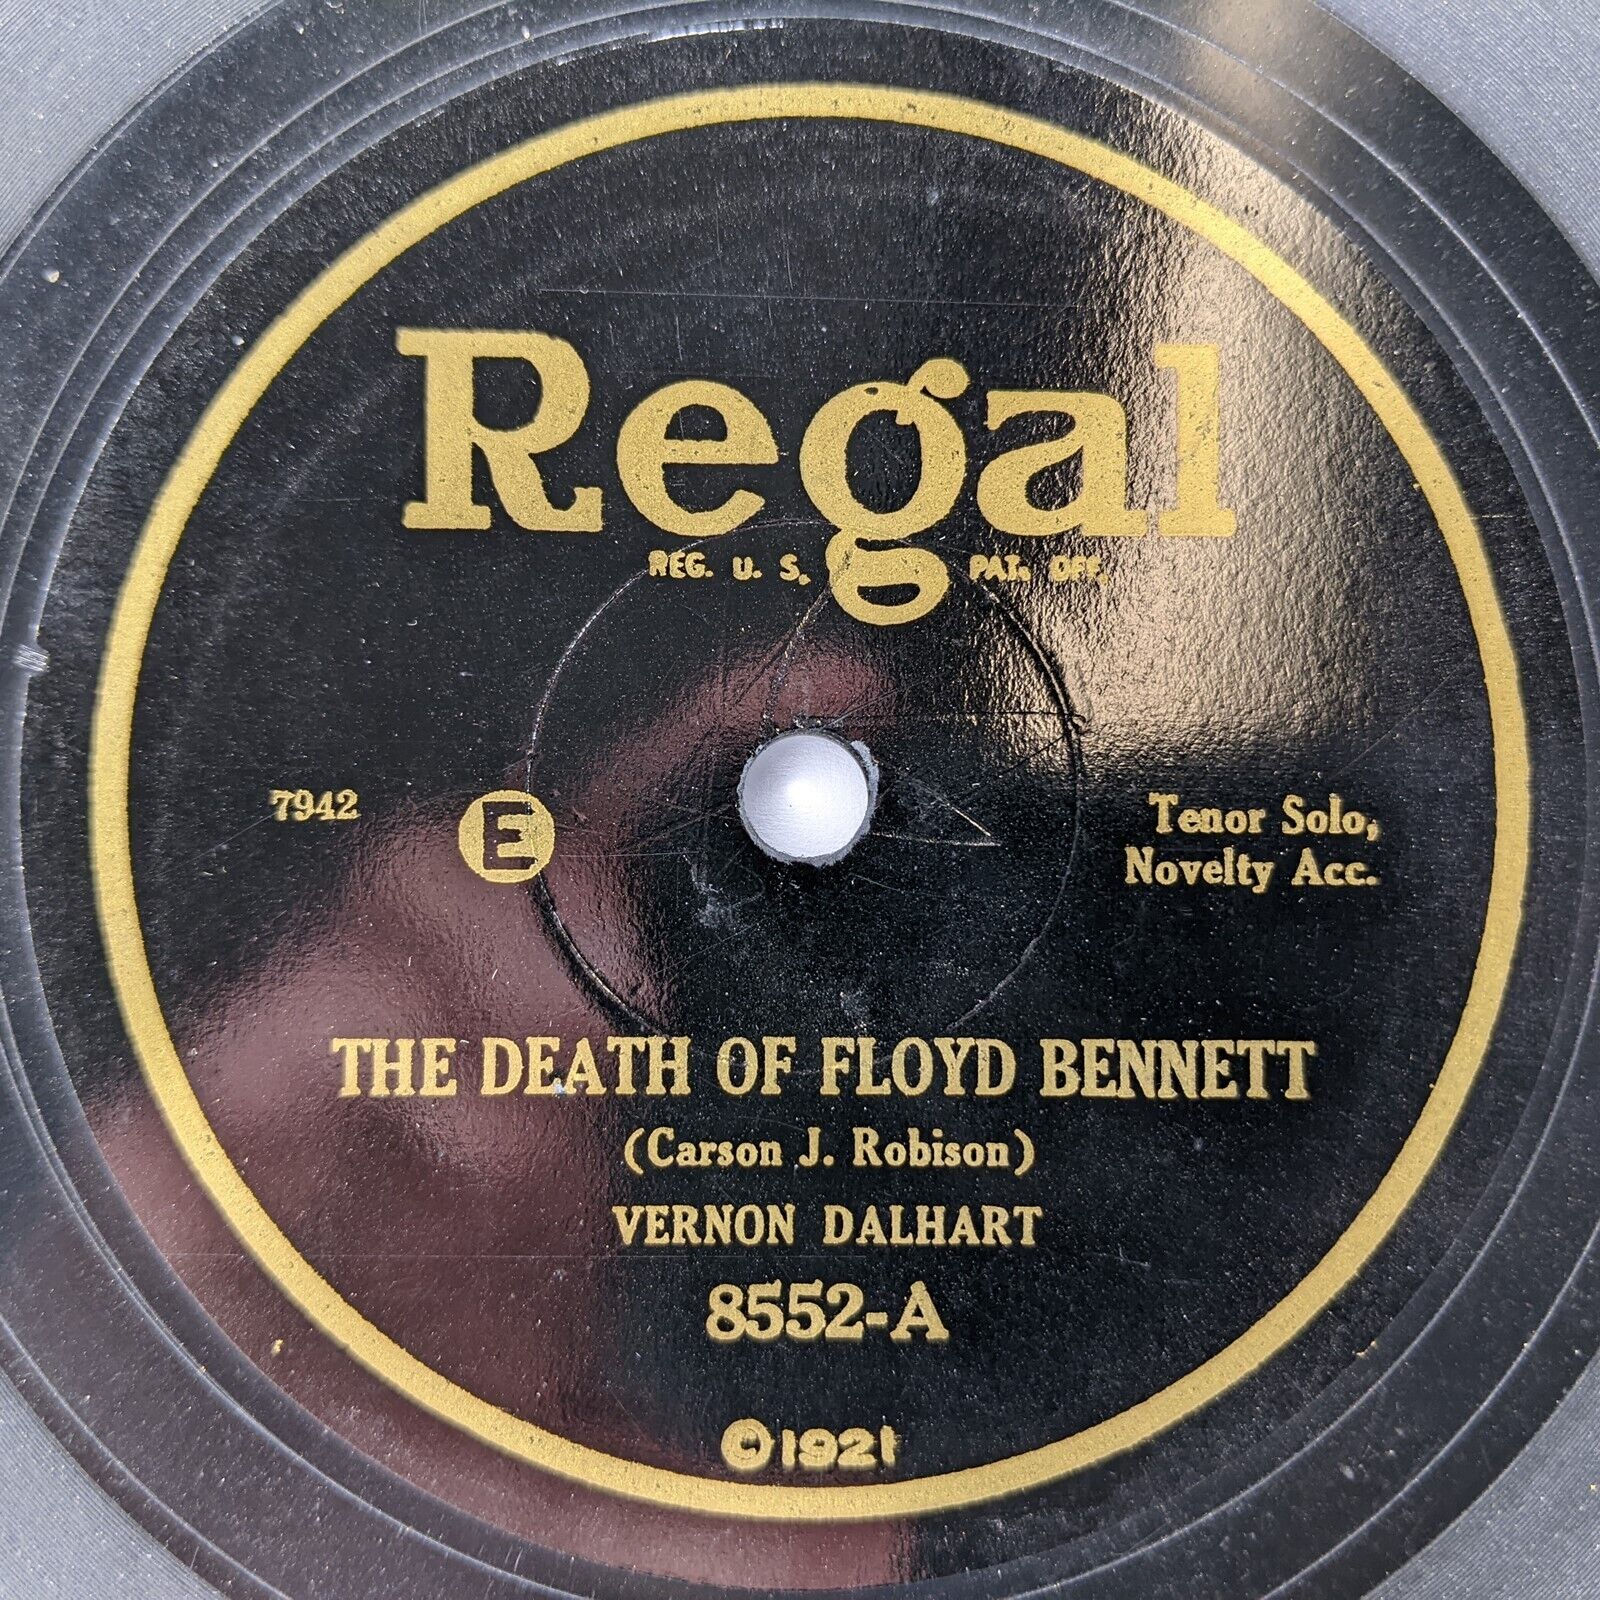 1928 Vernon Dalhart 78 "The Death Of Floyd Bennett / The Empty Cradle Regal" J1